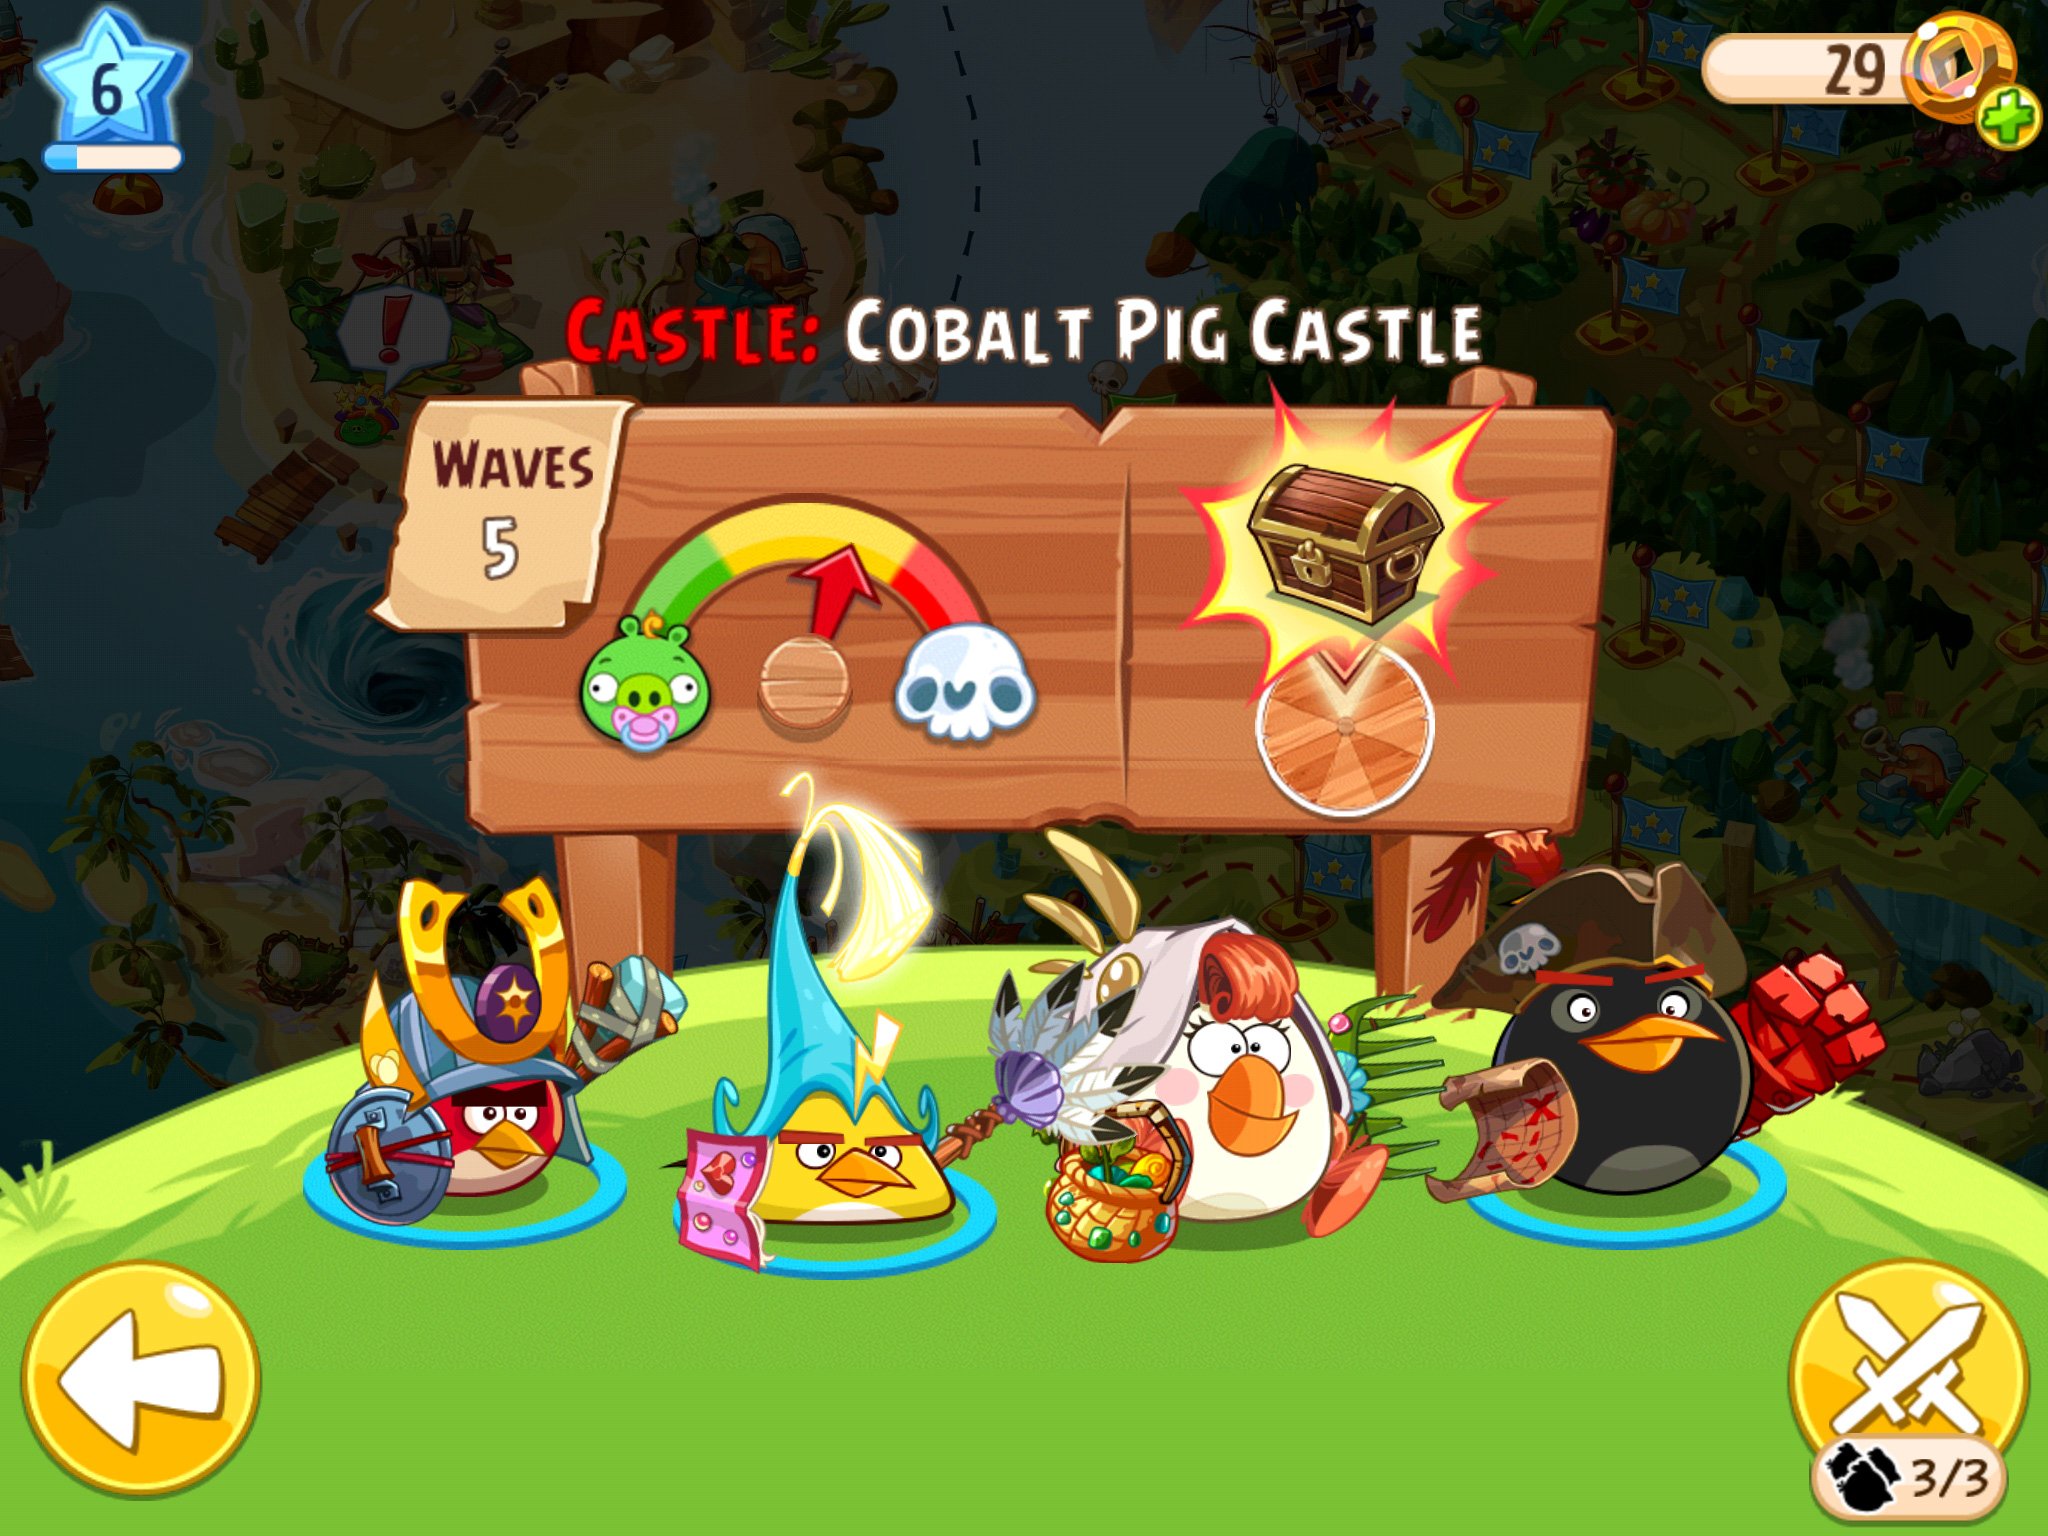 Angry Birds Epic rewards